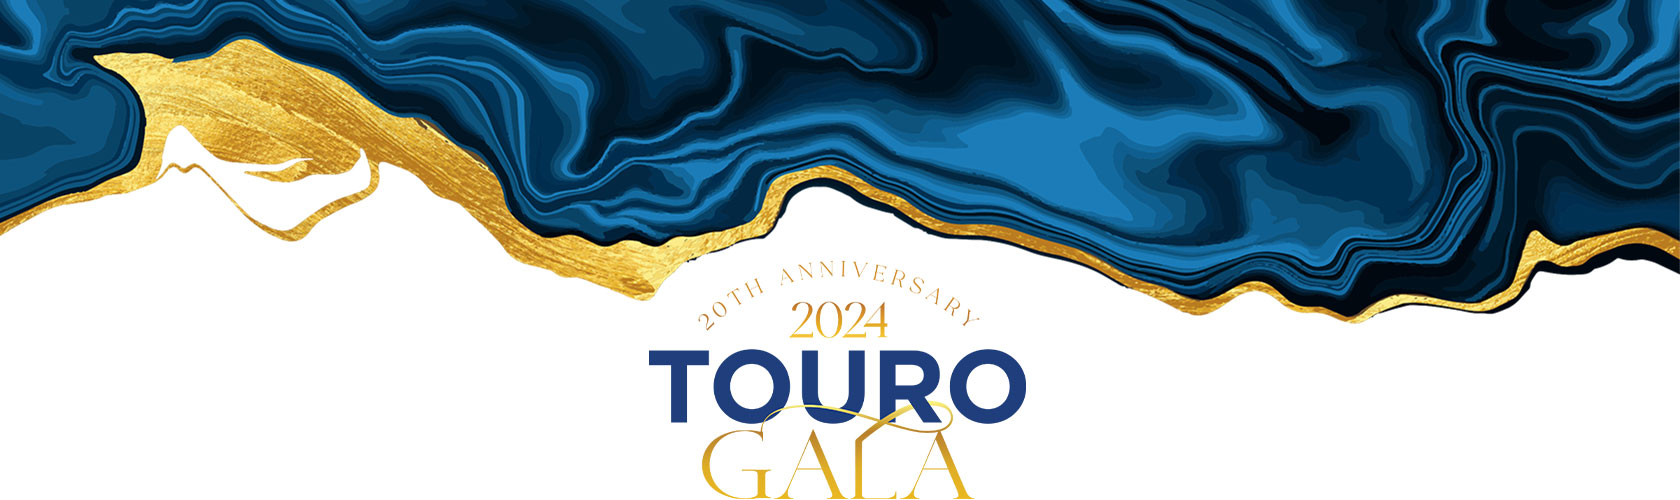 20th Anniversary 2024 Touro Gala Logo